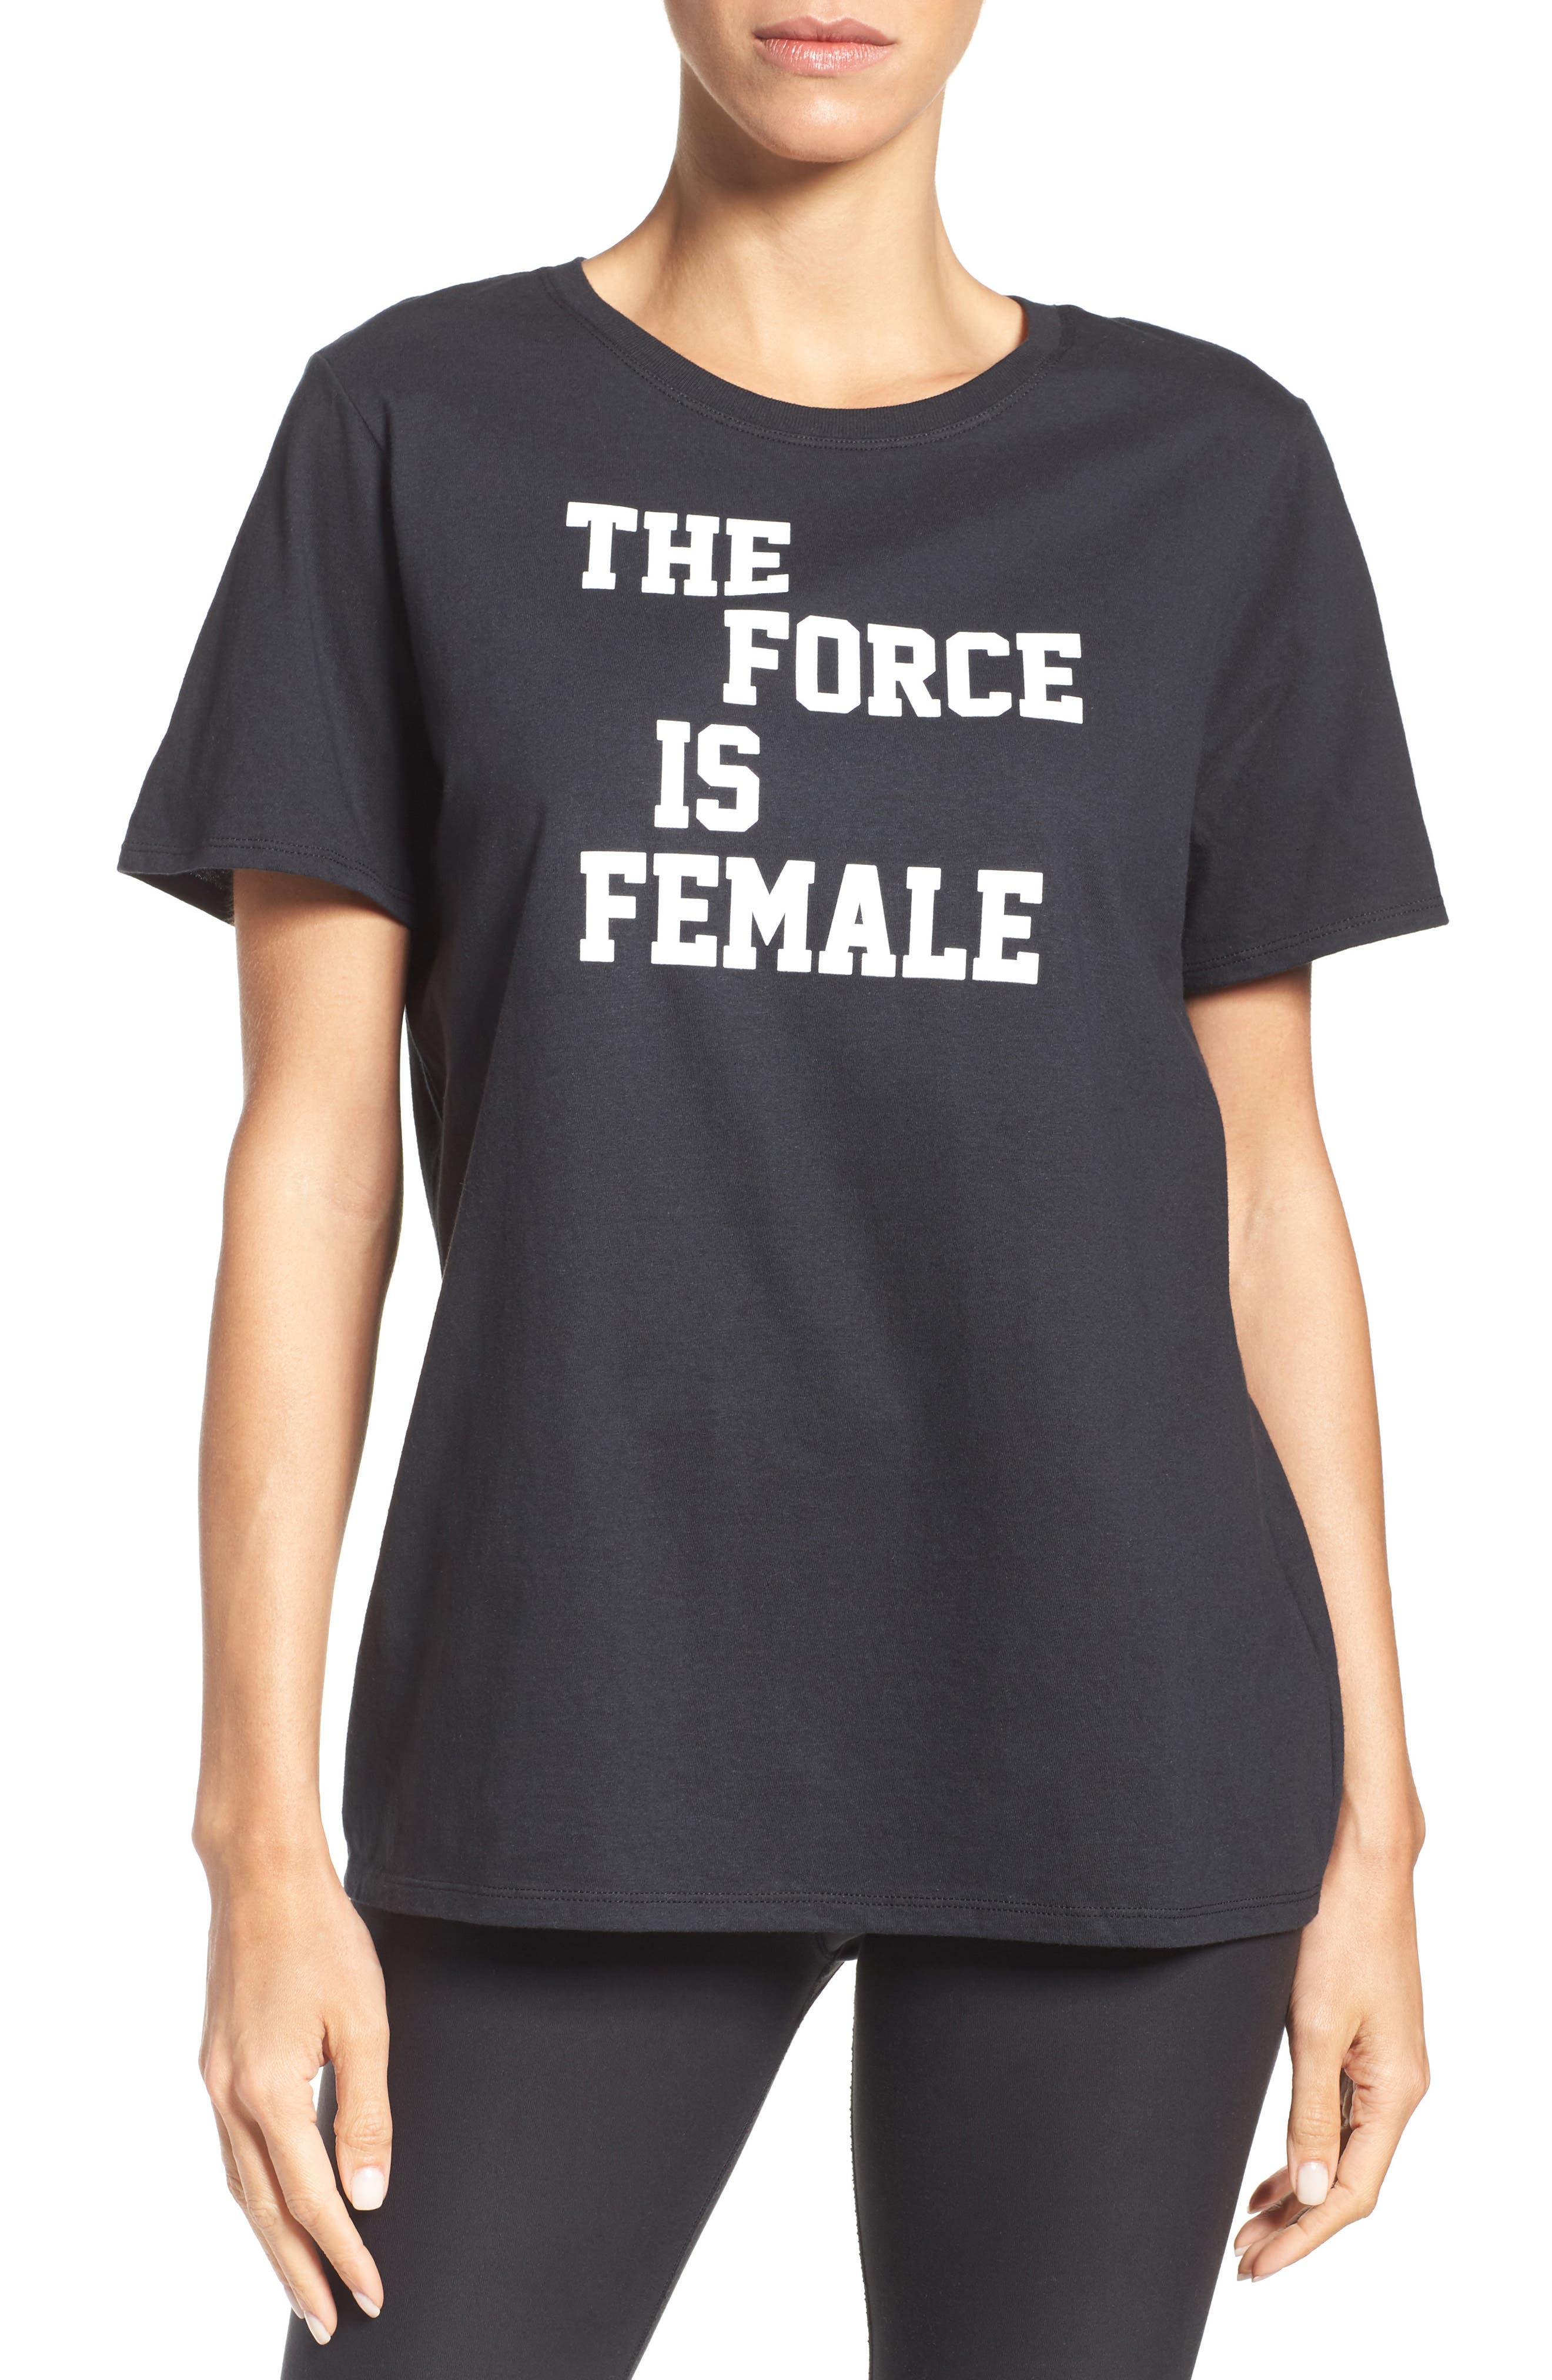 the force is female shirt nike